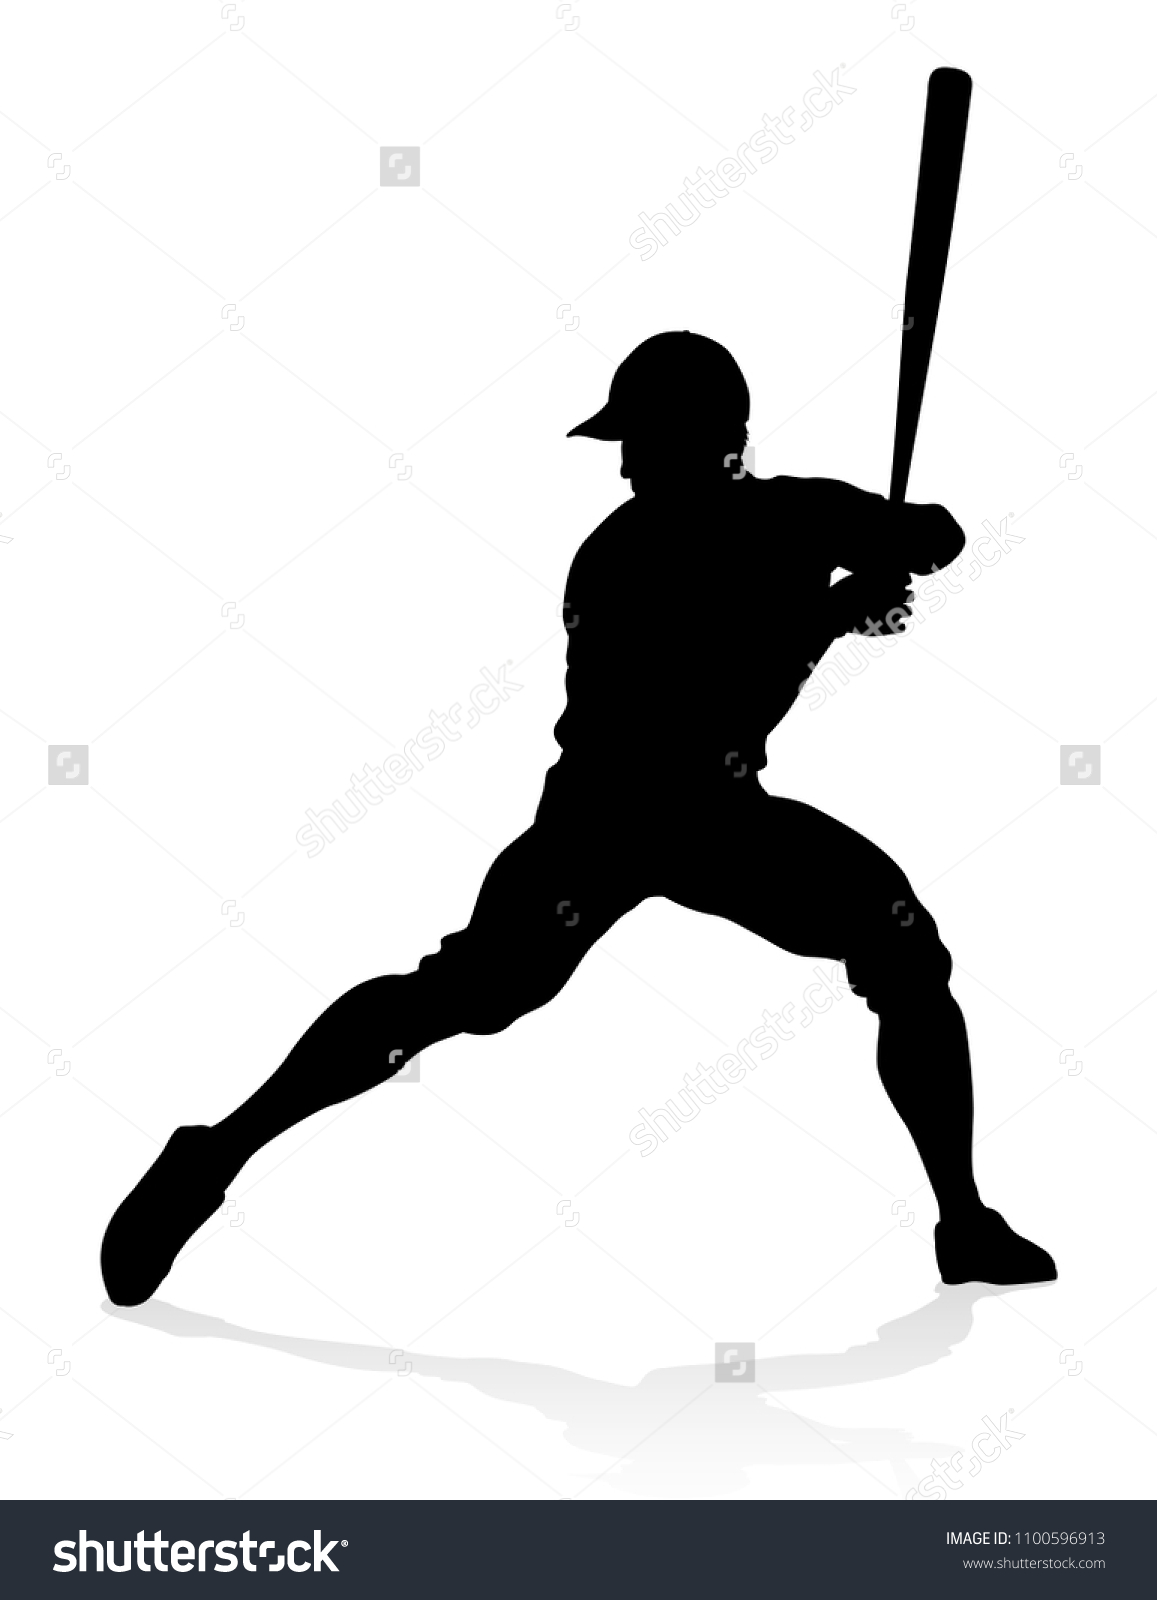 25 Baseball players siloette Images, Stock Photos & Vectors | Shutterstock